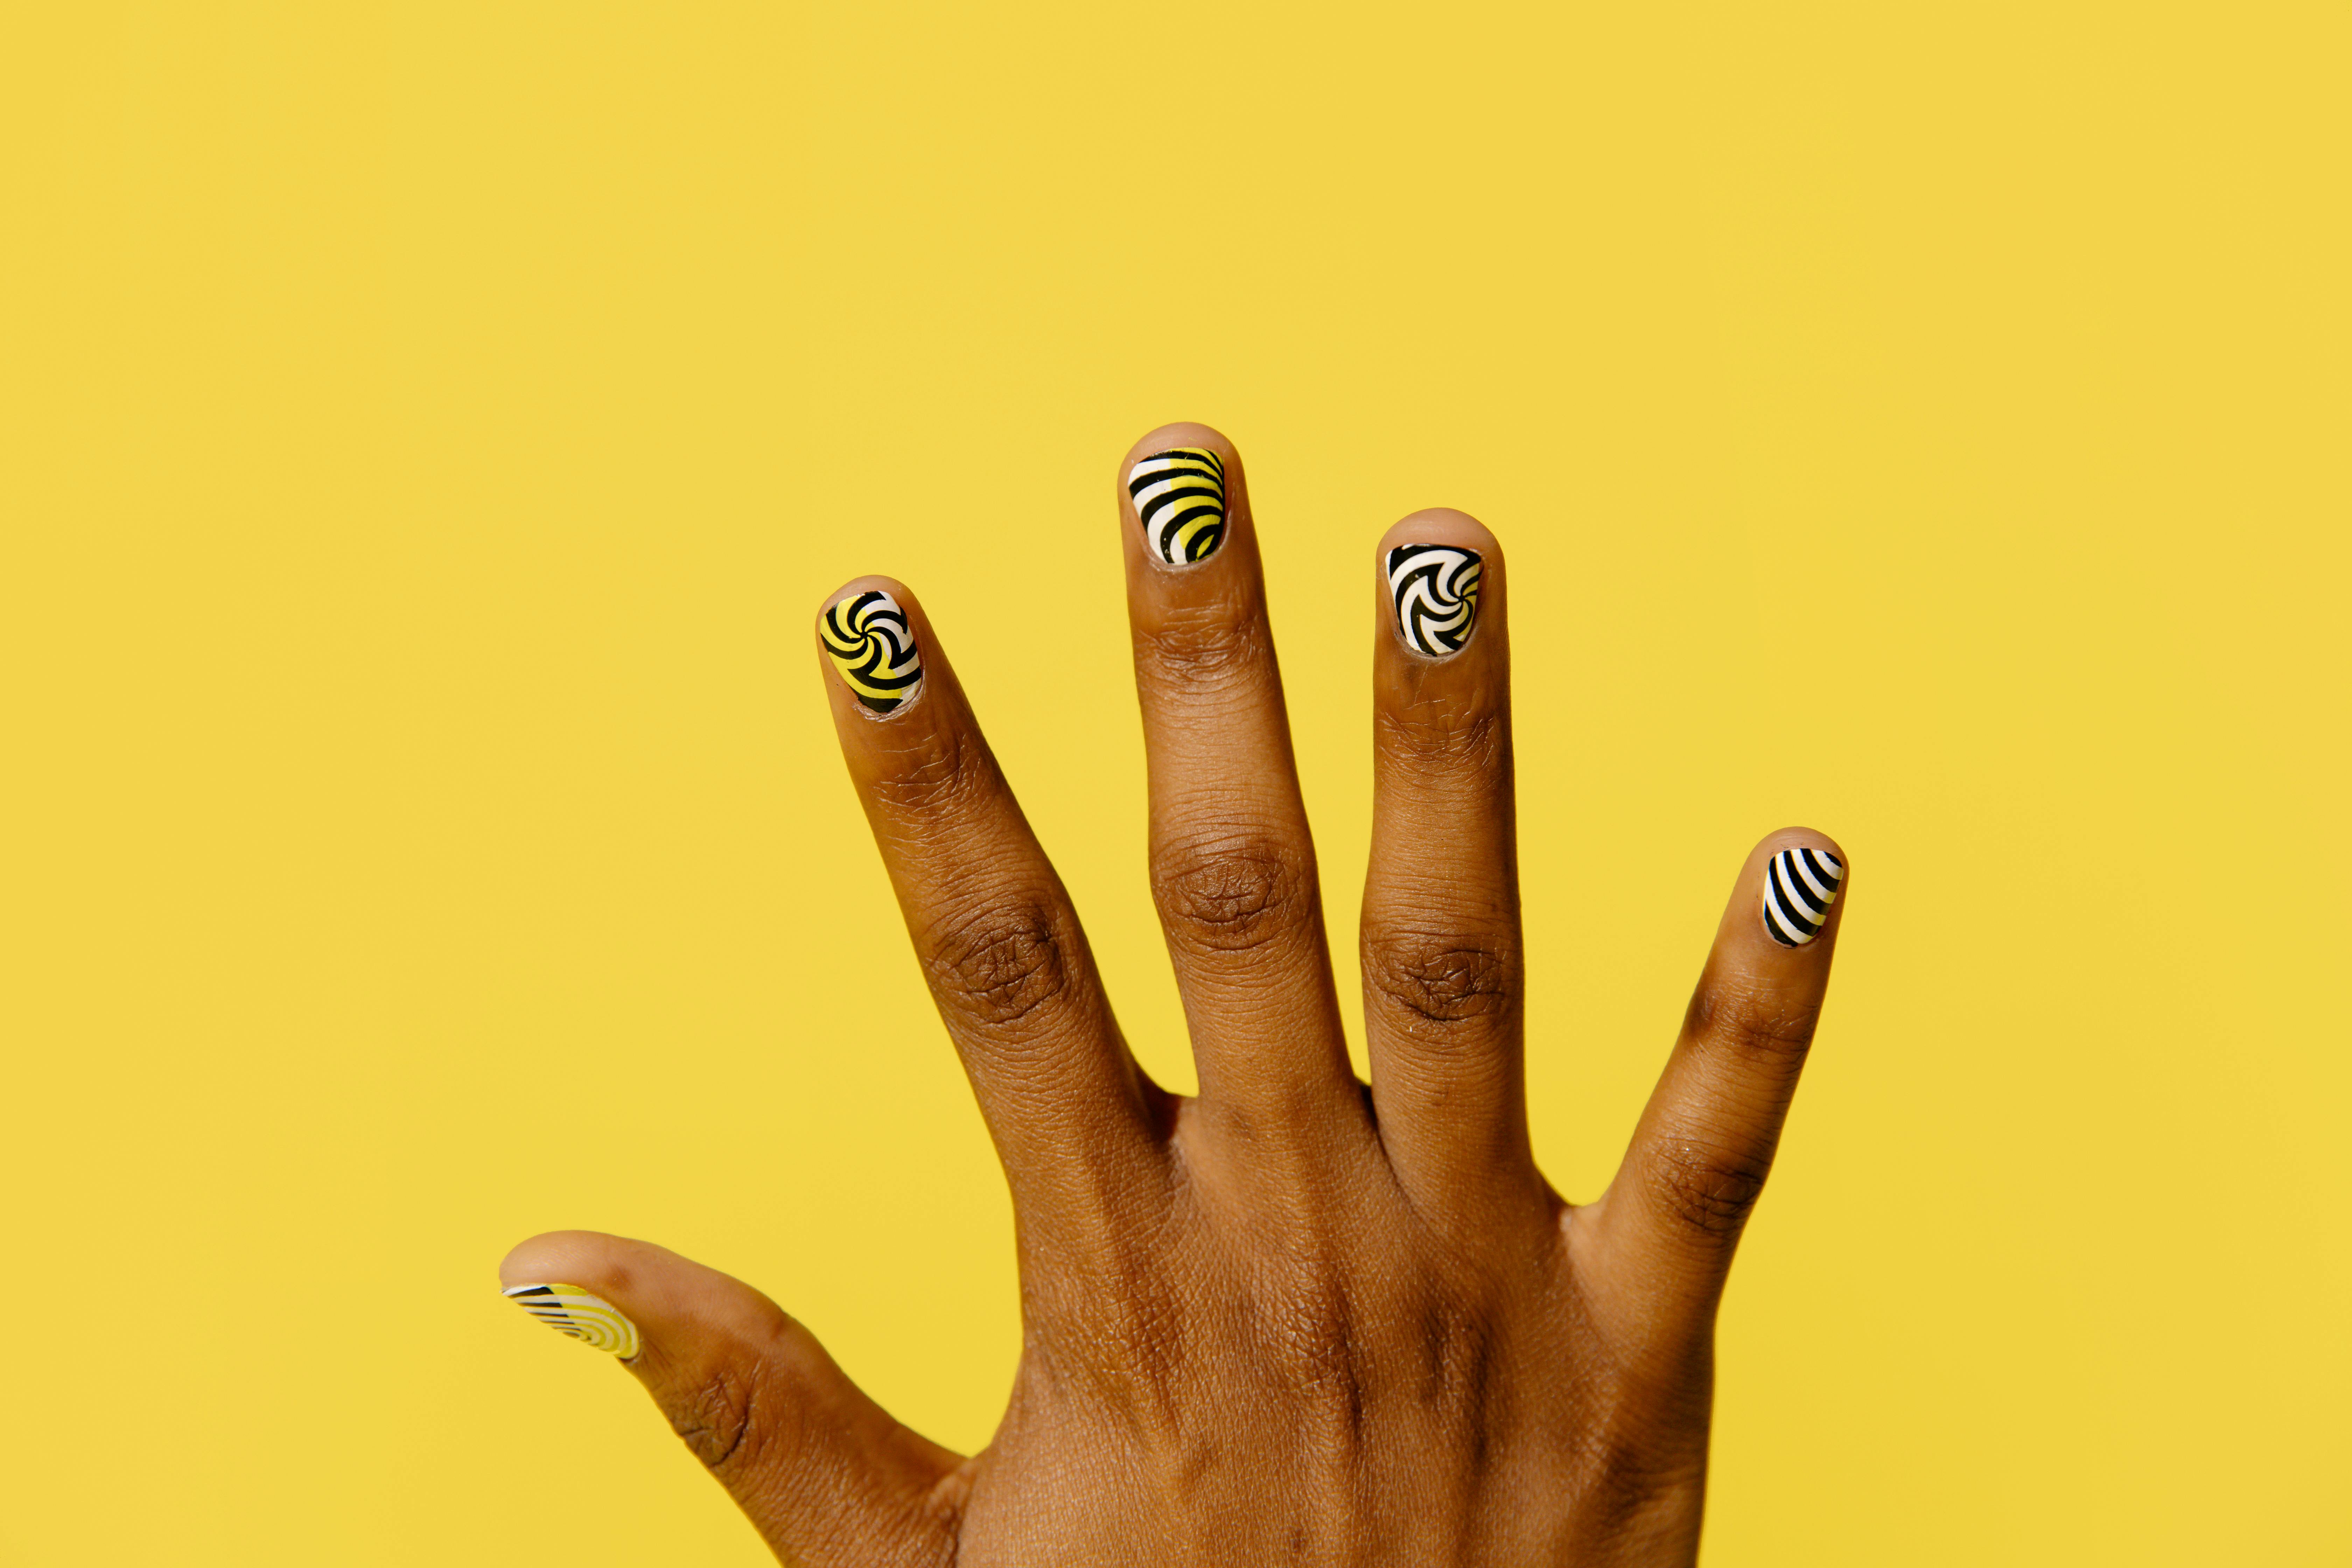 Fingers with nail polish · free stock photo